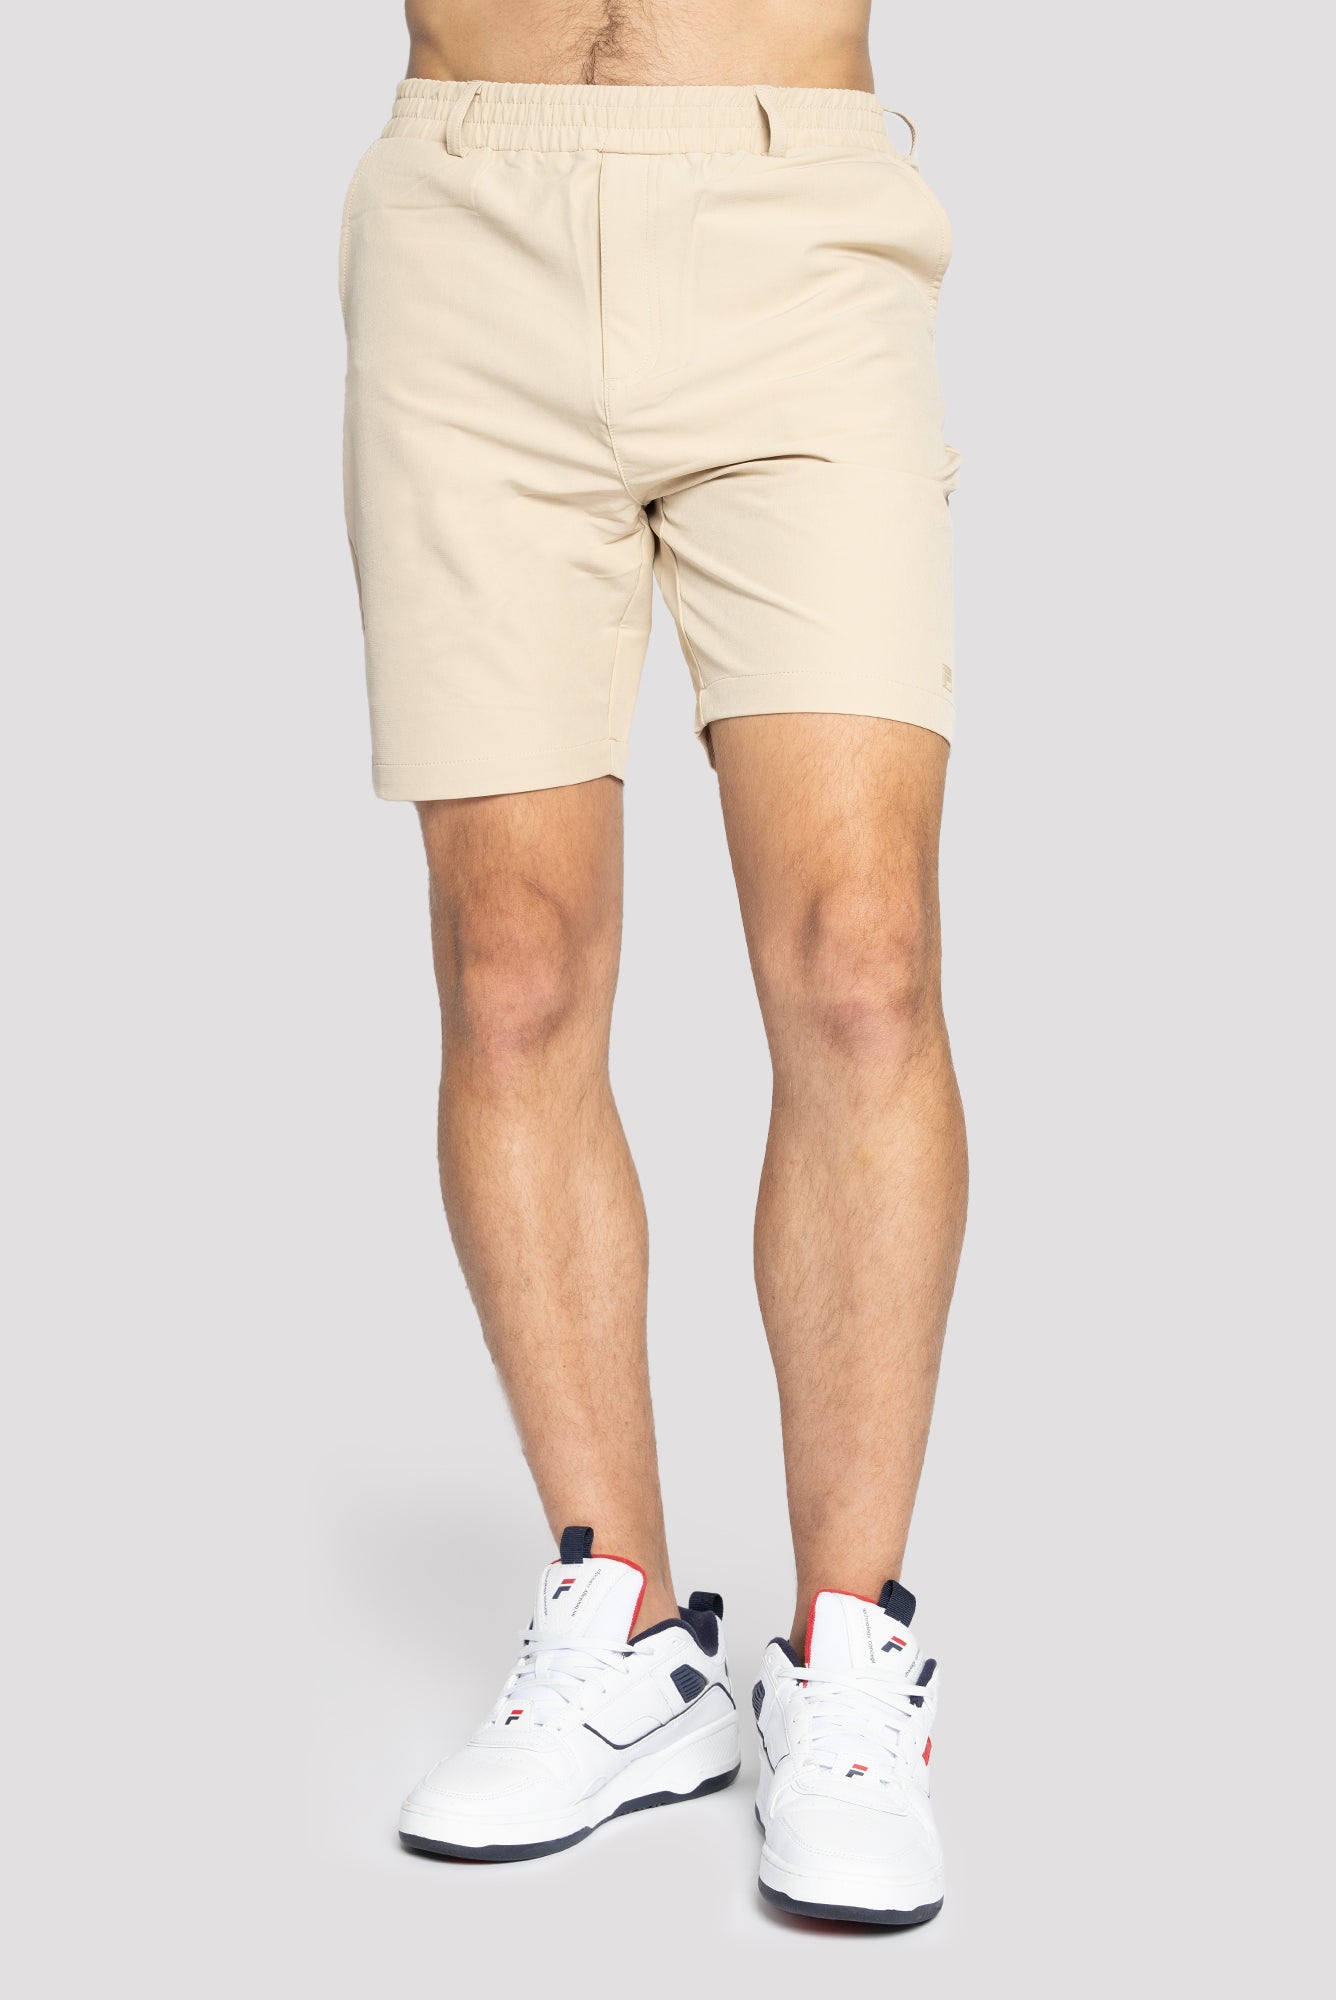 Fila Sport Golf Pants Men's 38x34 Black Poly 4 Pocket Performance | eBay